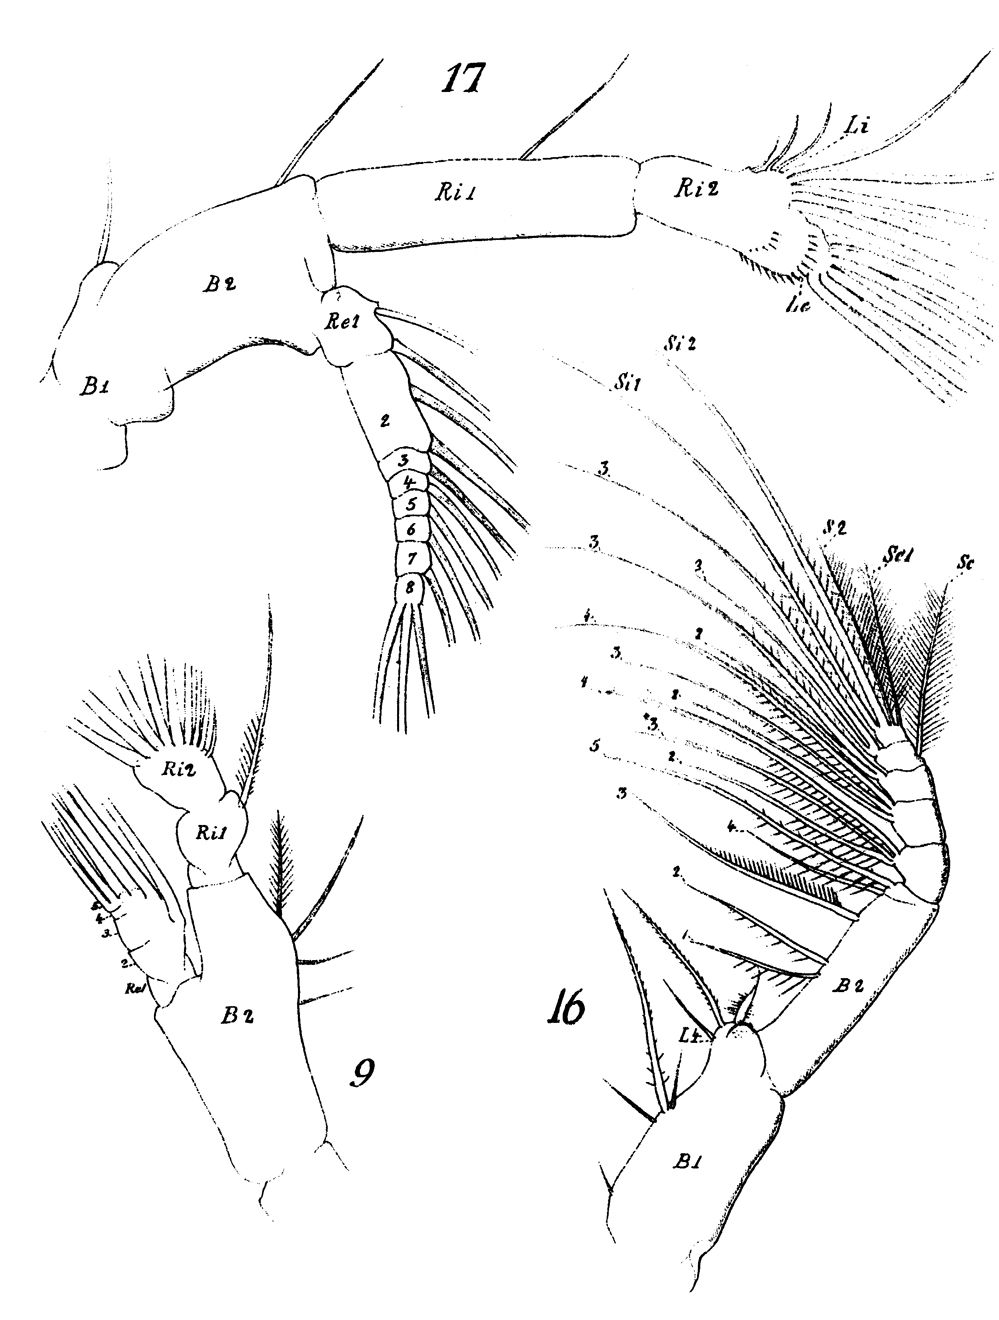 Espèce Rhincalanus nasutus - Planche 18 de figures morphologiques